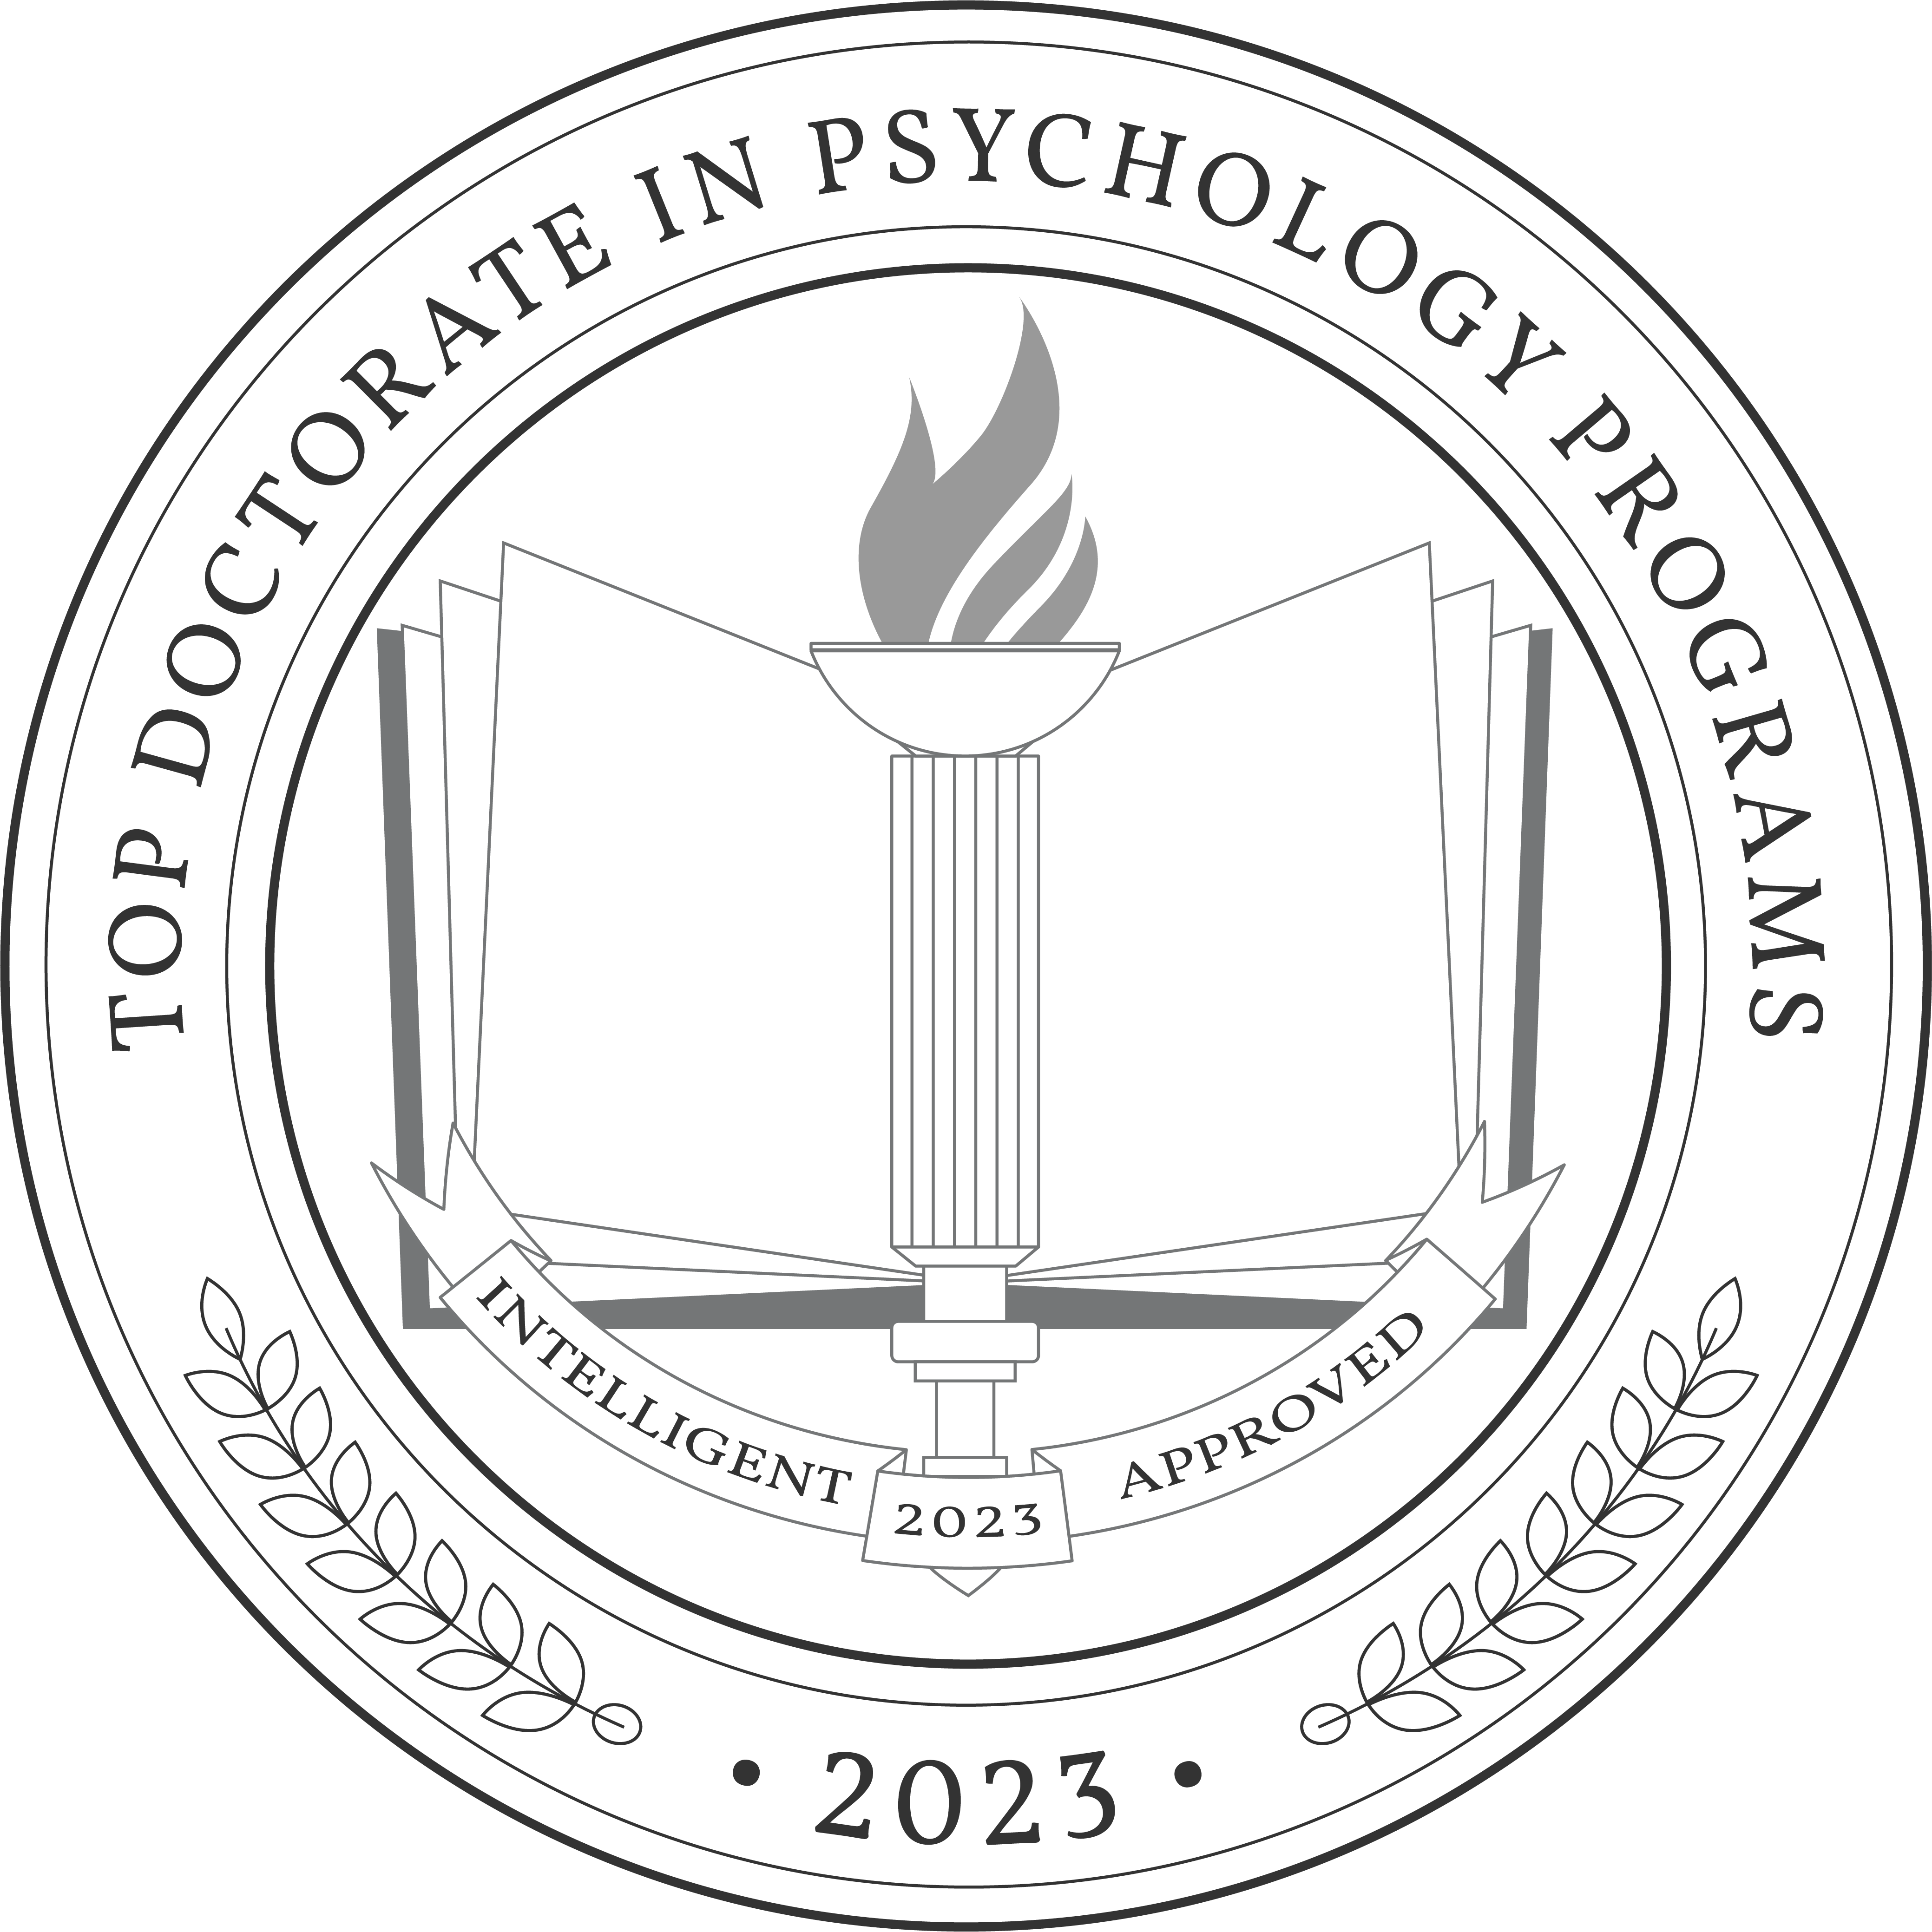 phd psychology 2023